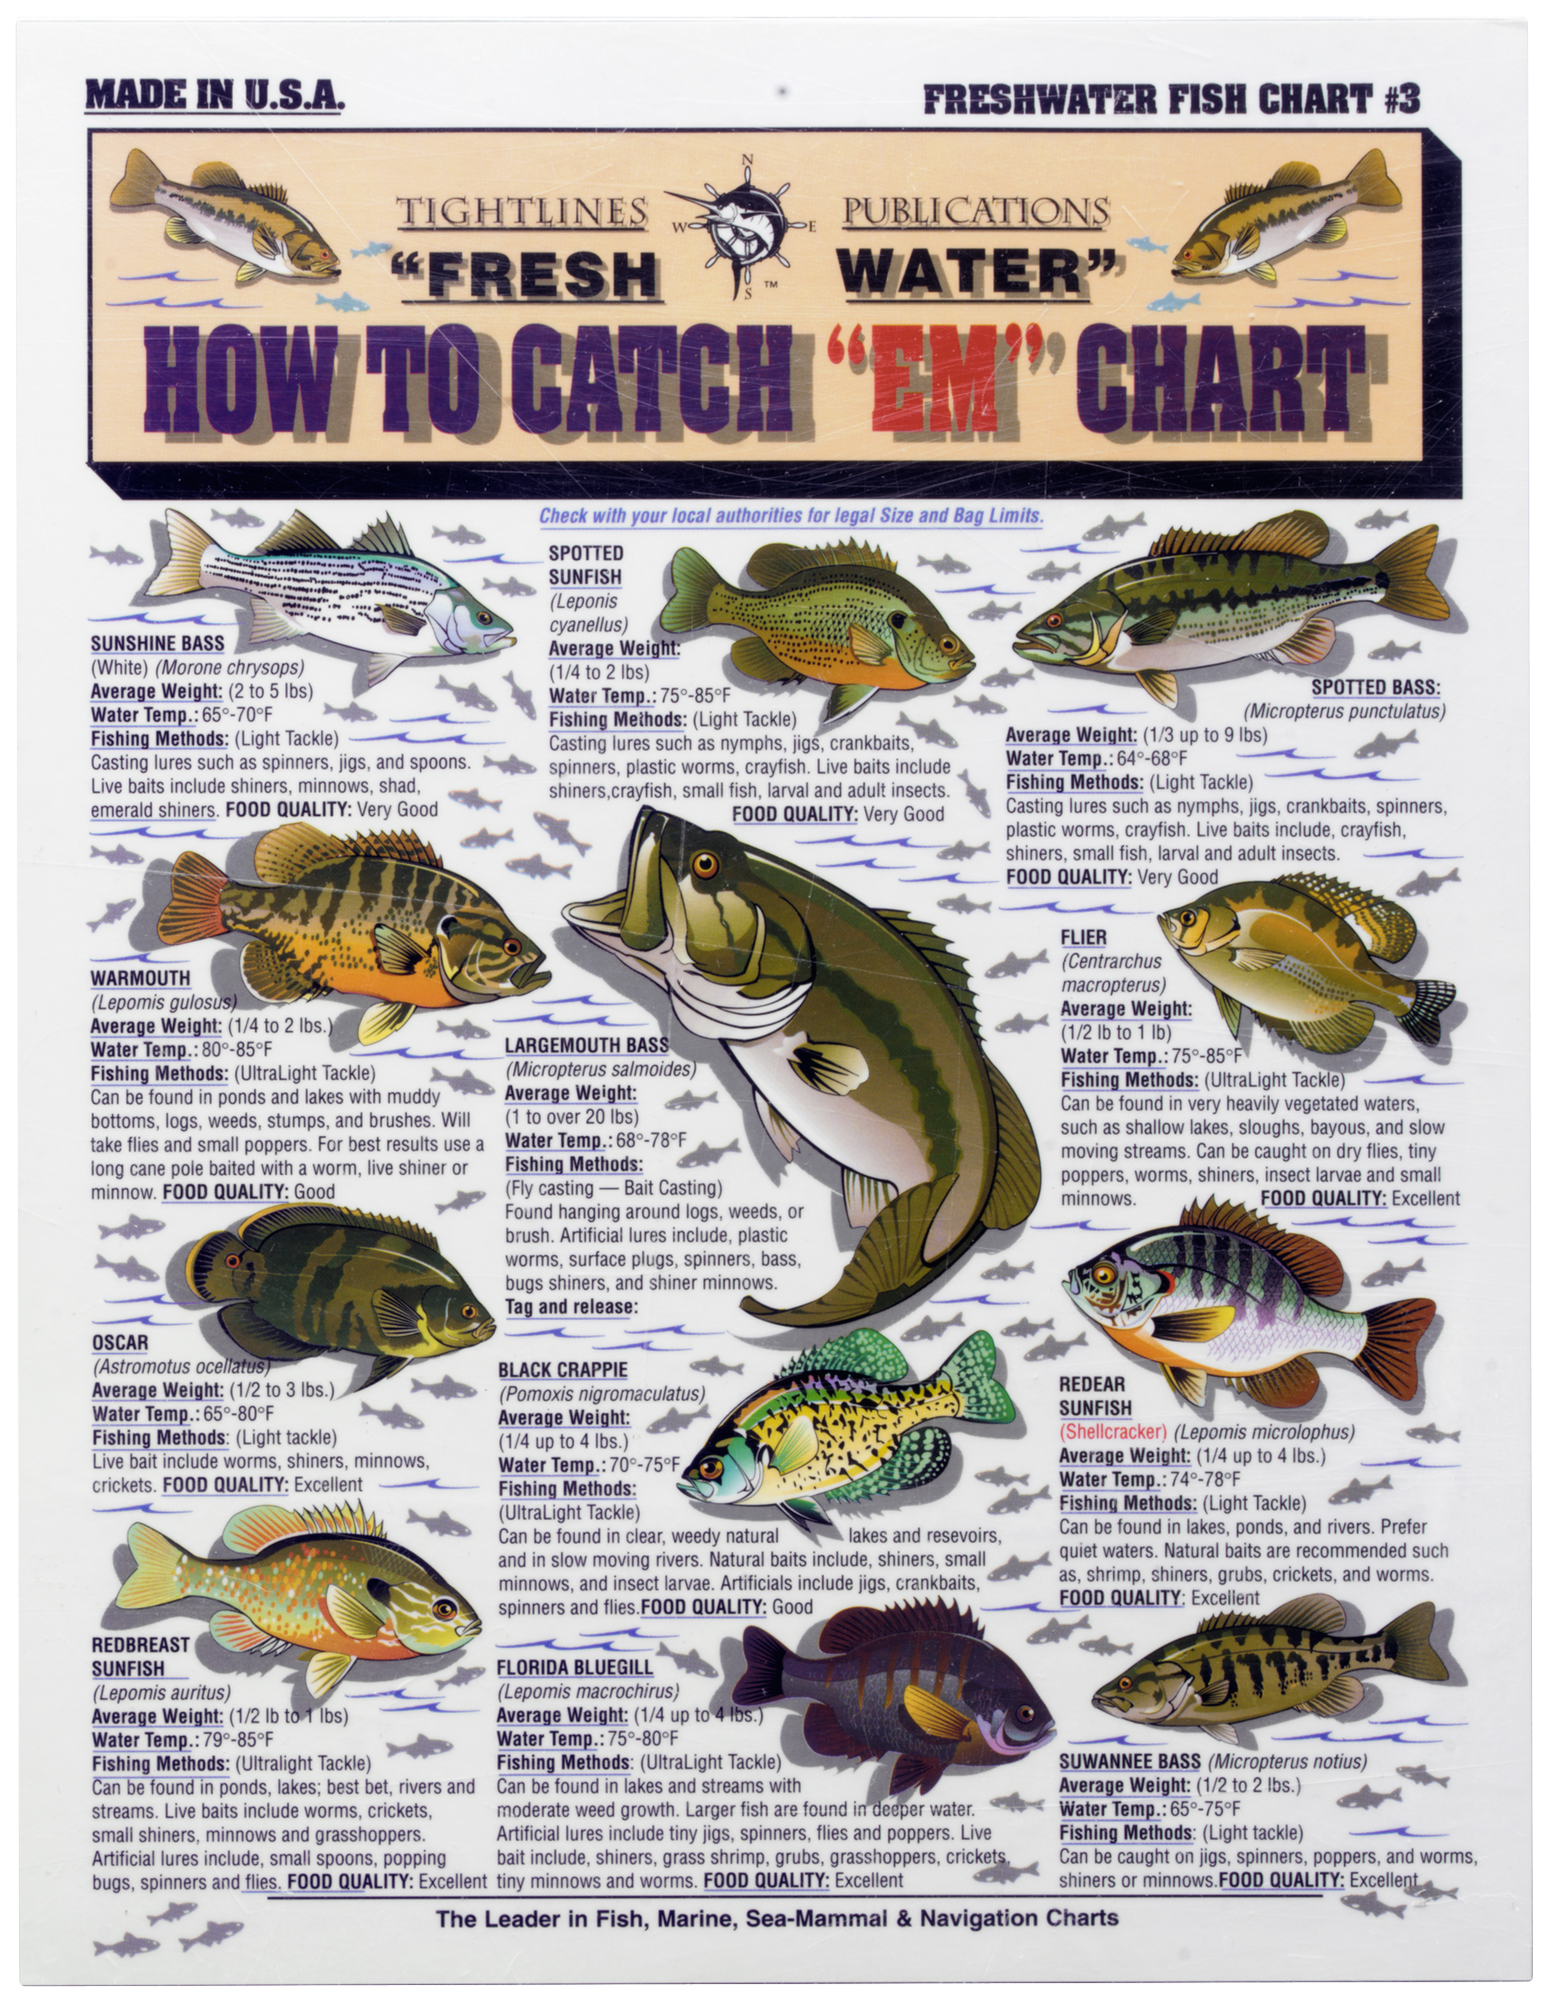 Waterproof Fishing Charts - How To Catch EM Chart - Freshwater #3